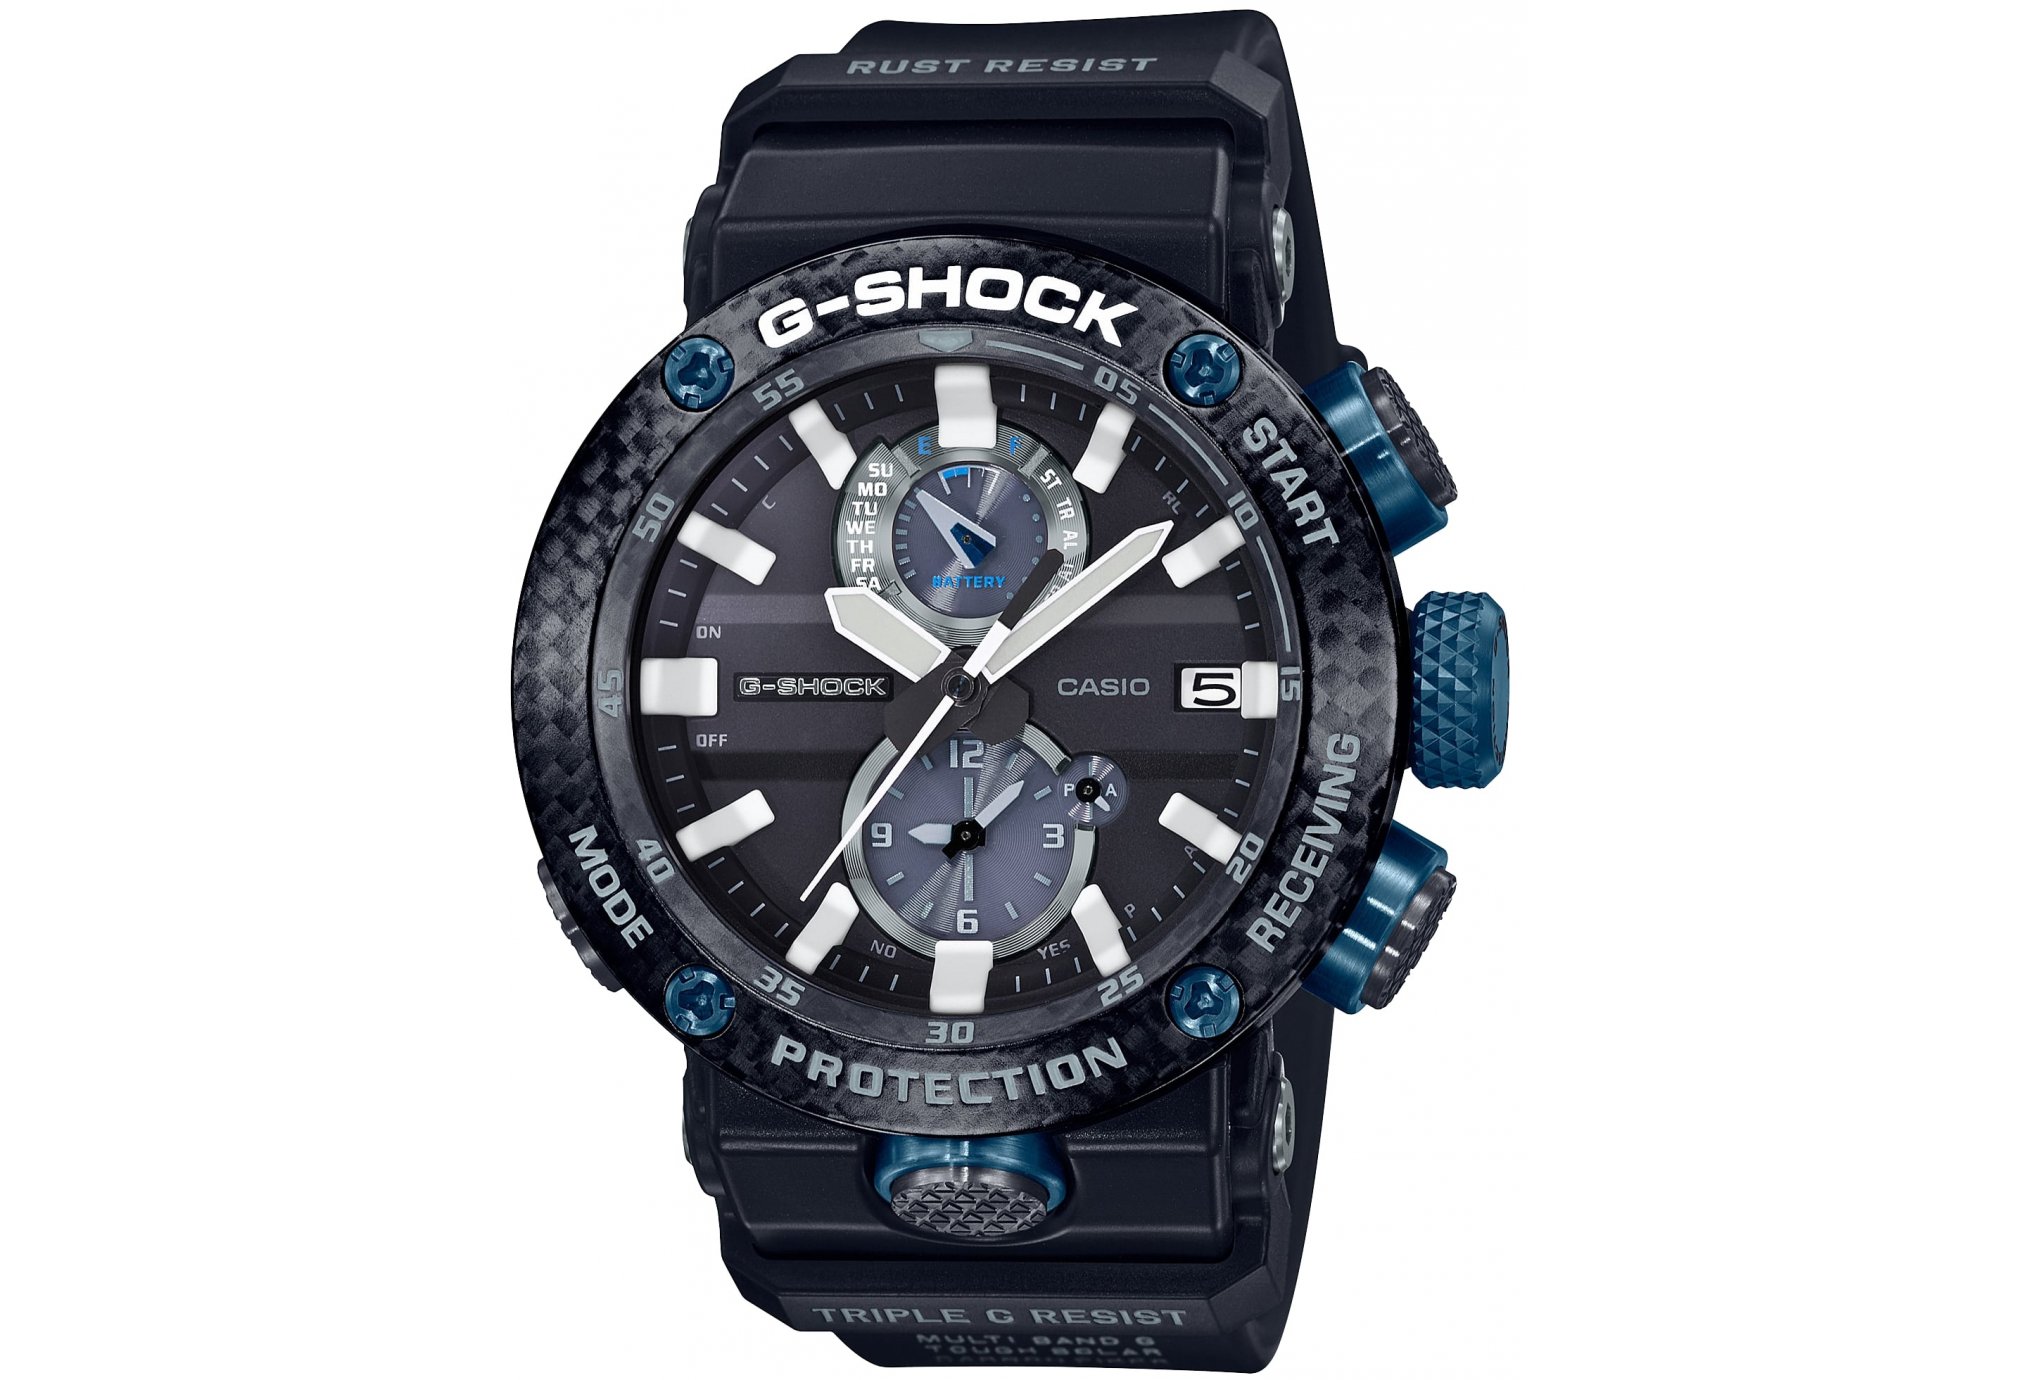 Casio G-Shock gravity master gwr-b1000-1a1er montres de sport